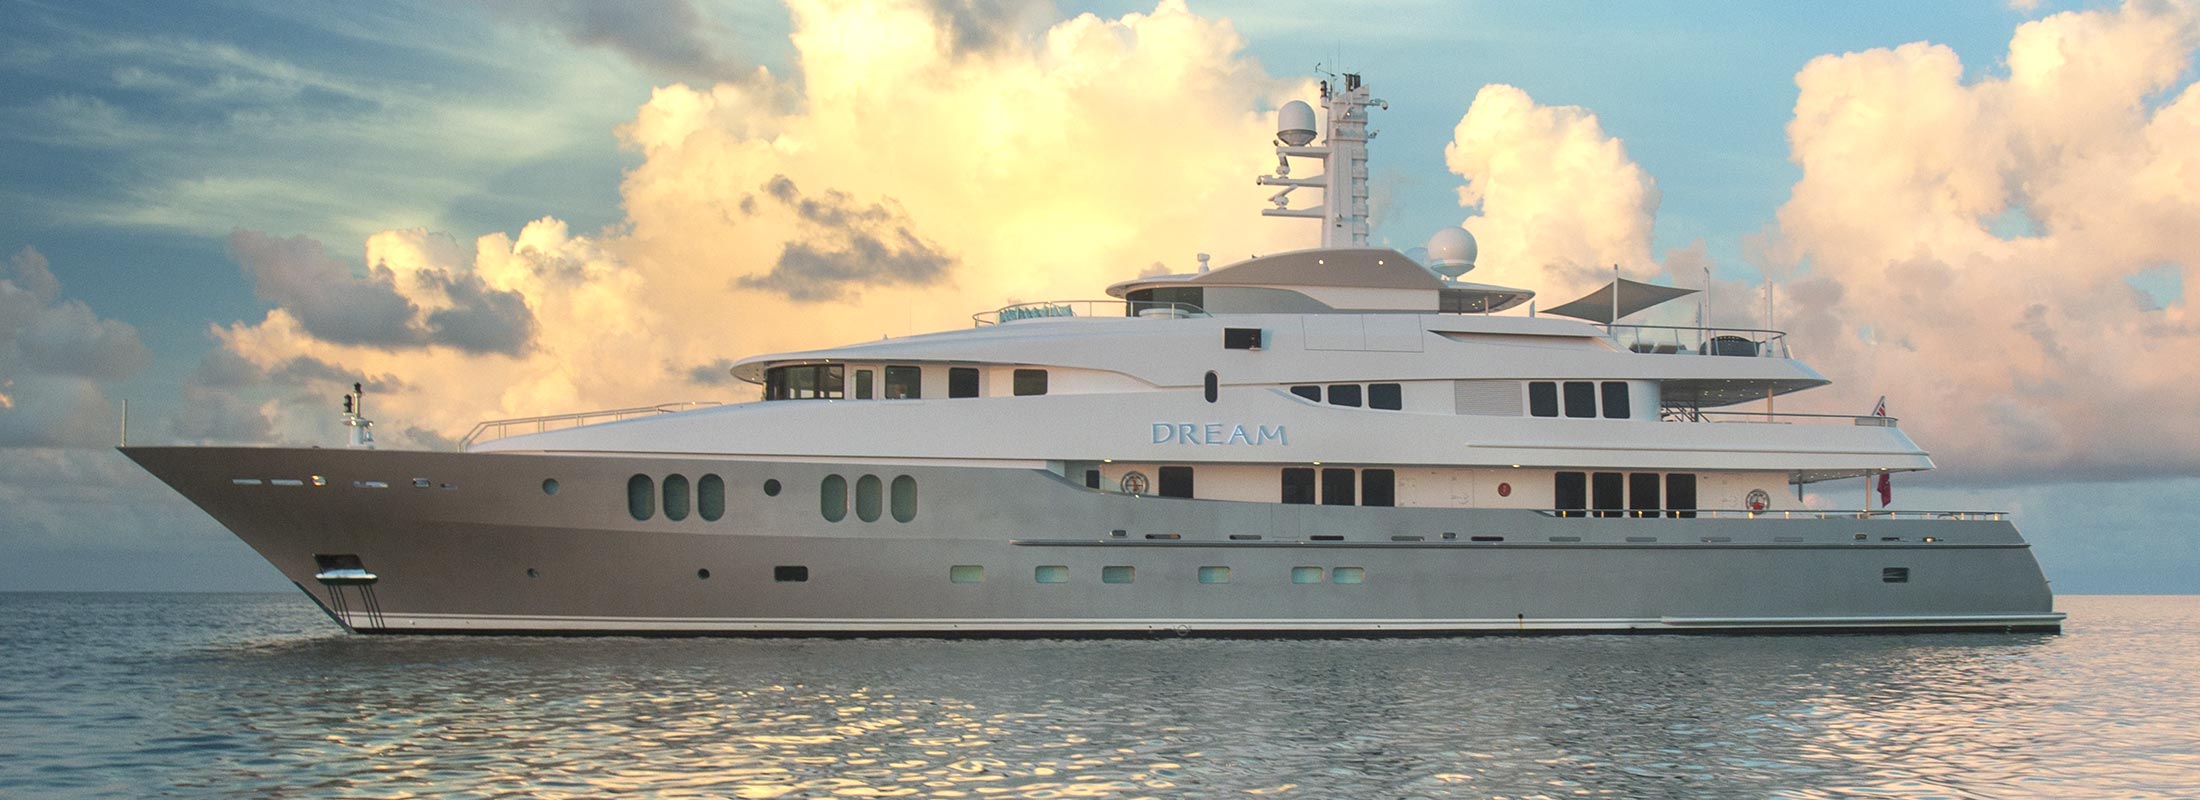 Dream-motor-yacht-charter-a-yacht-slider1.jpg